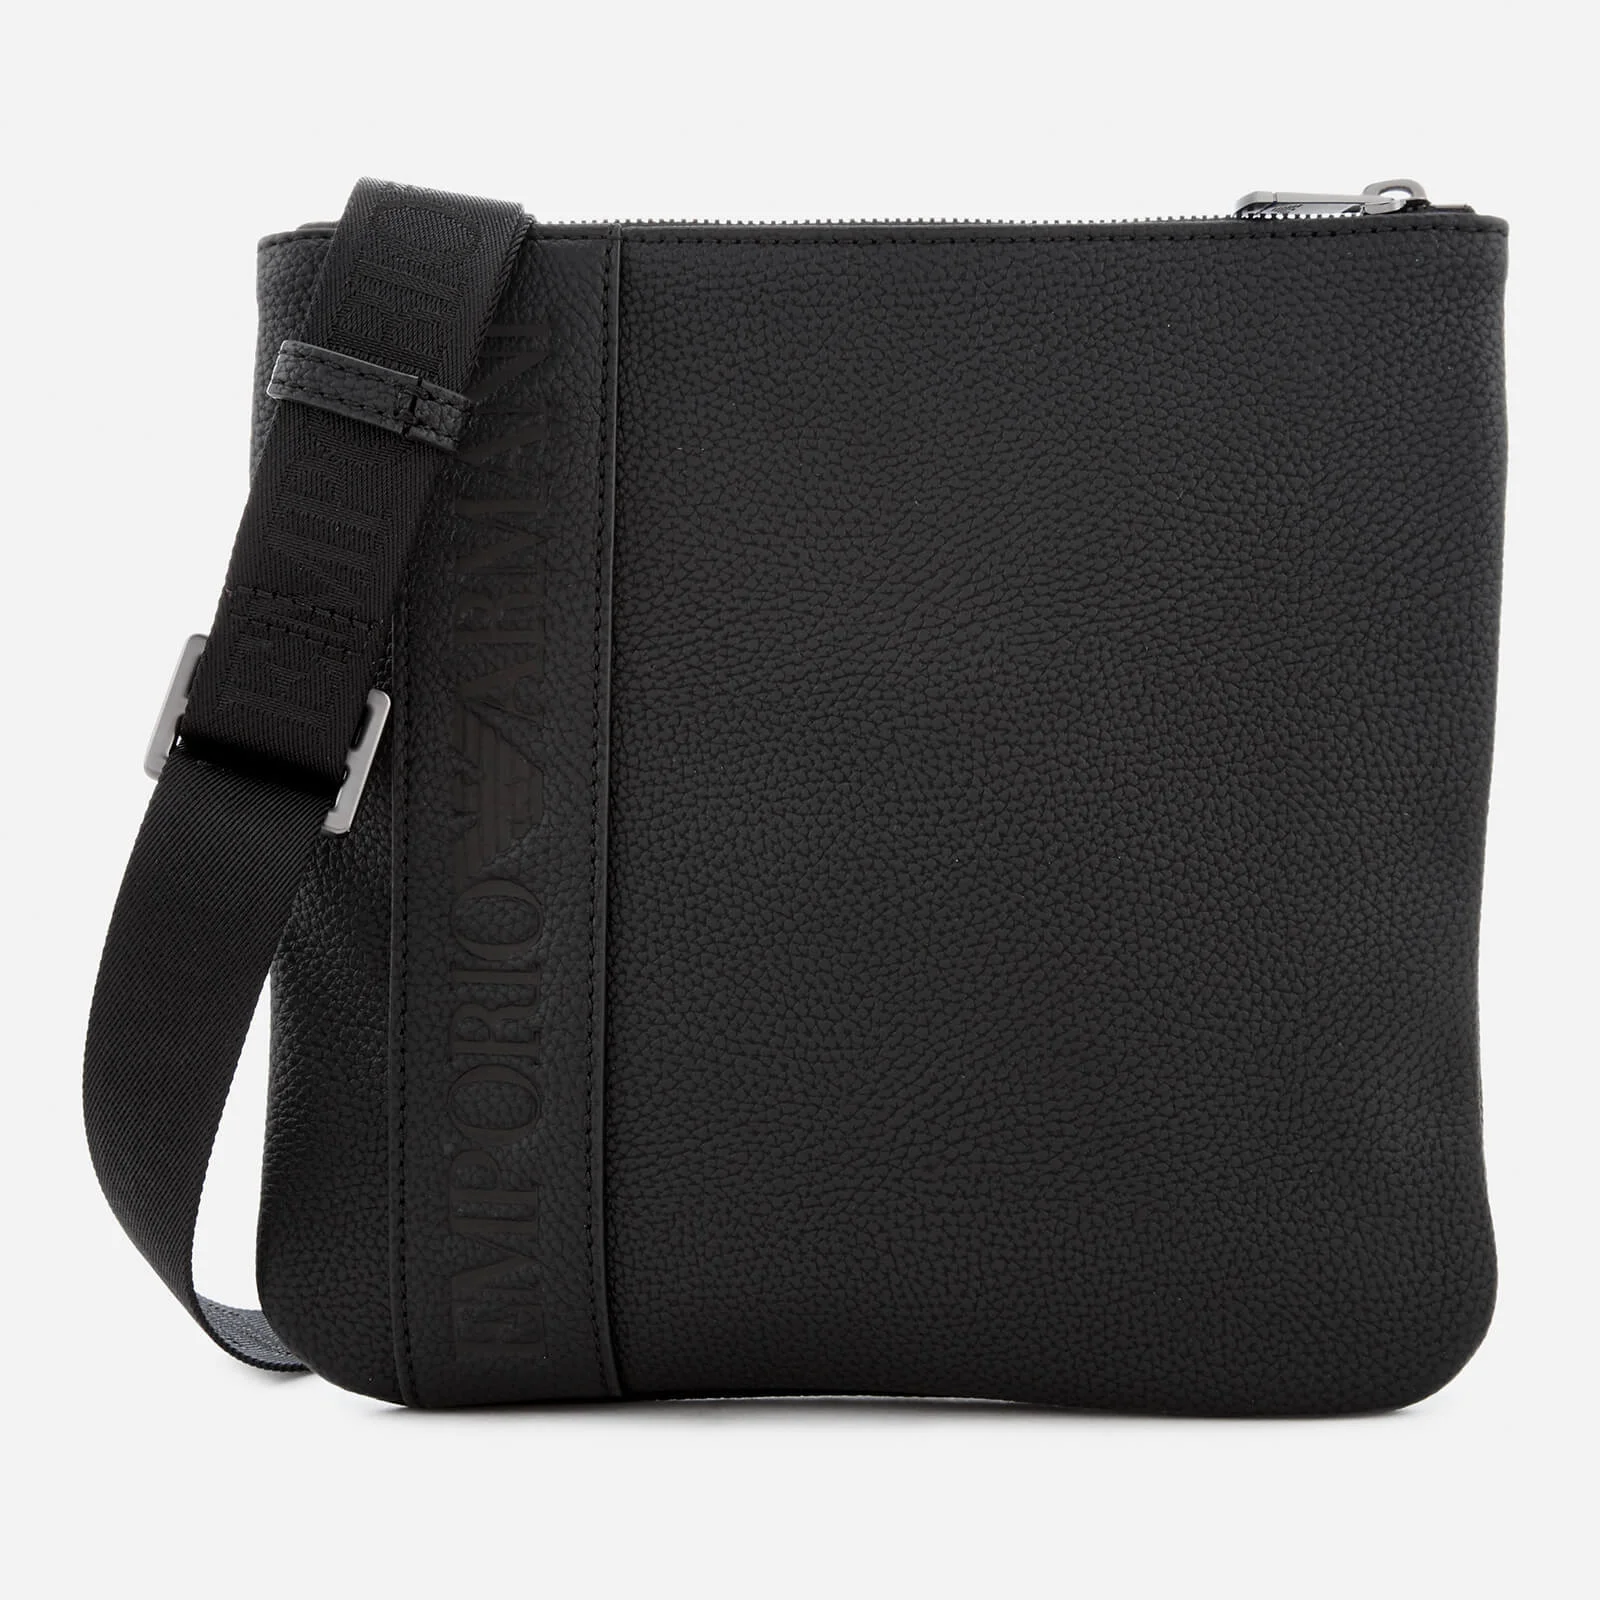 Emporio Armani Men's Small Flat Messenger Bag - Black Image 1